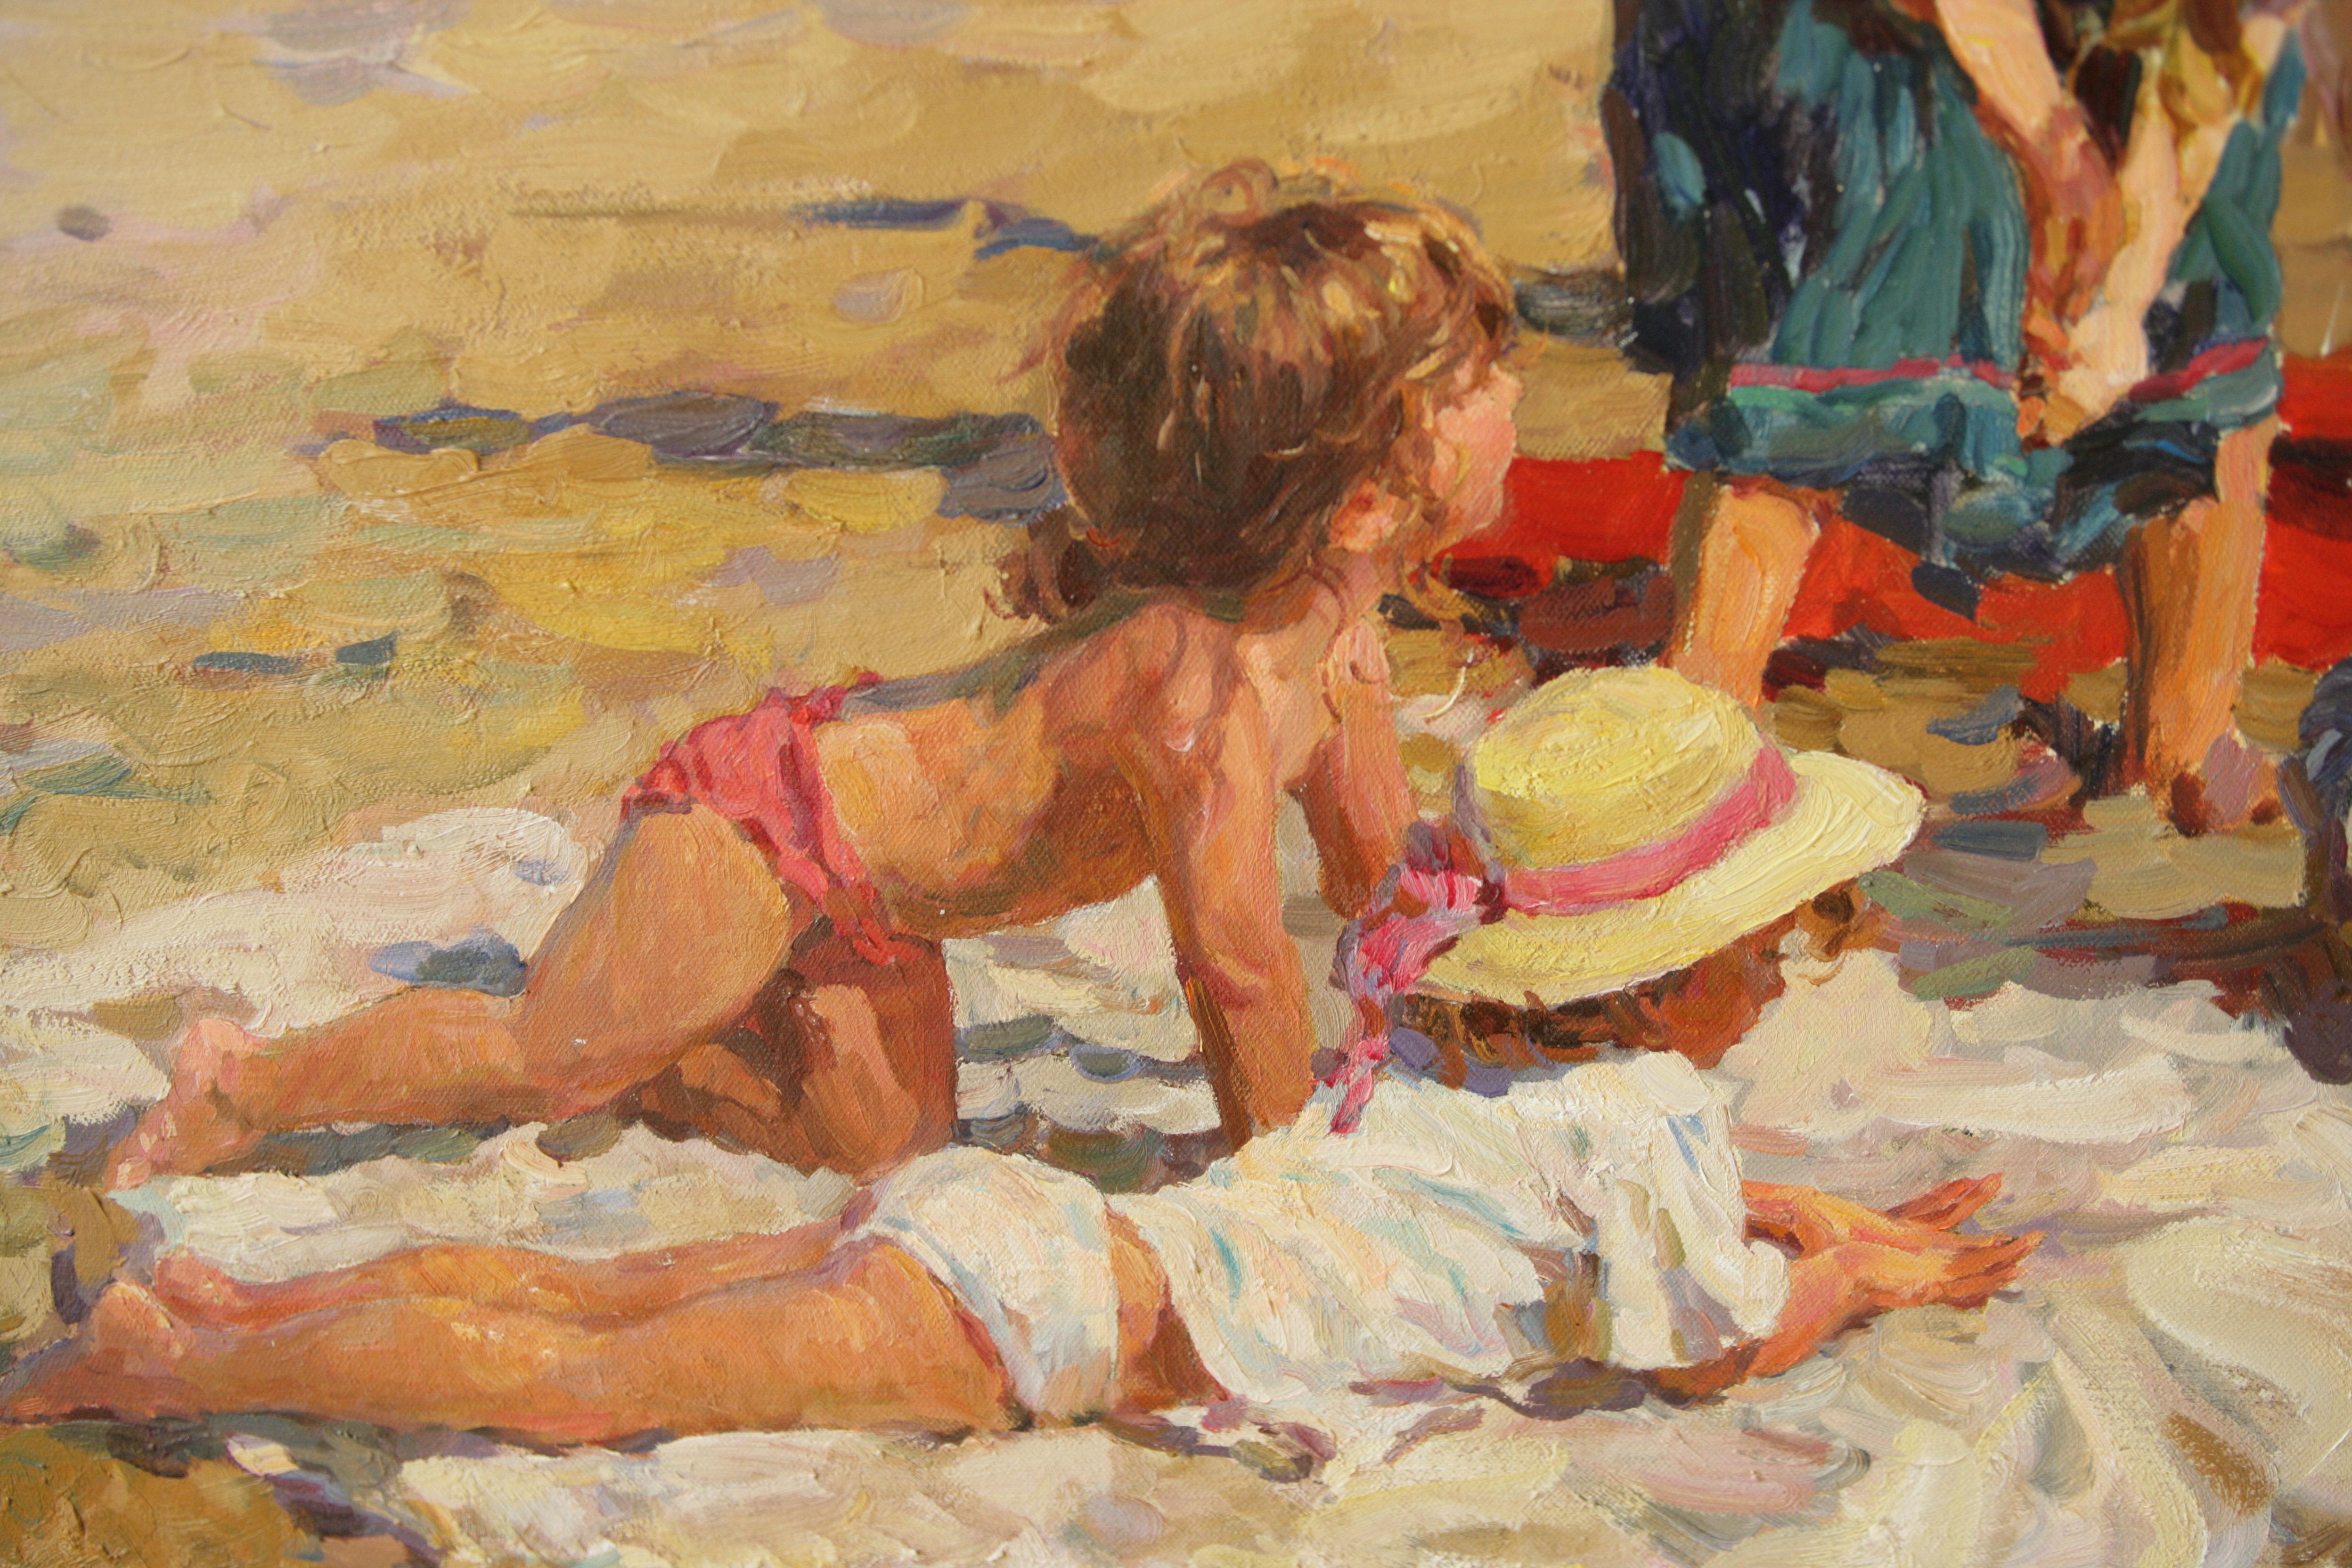 MAY BANK HOLIDAY at the BEACH - Impressionist Painting by Yuri Krotov